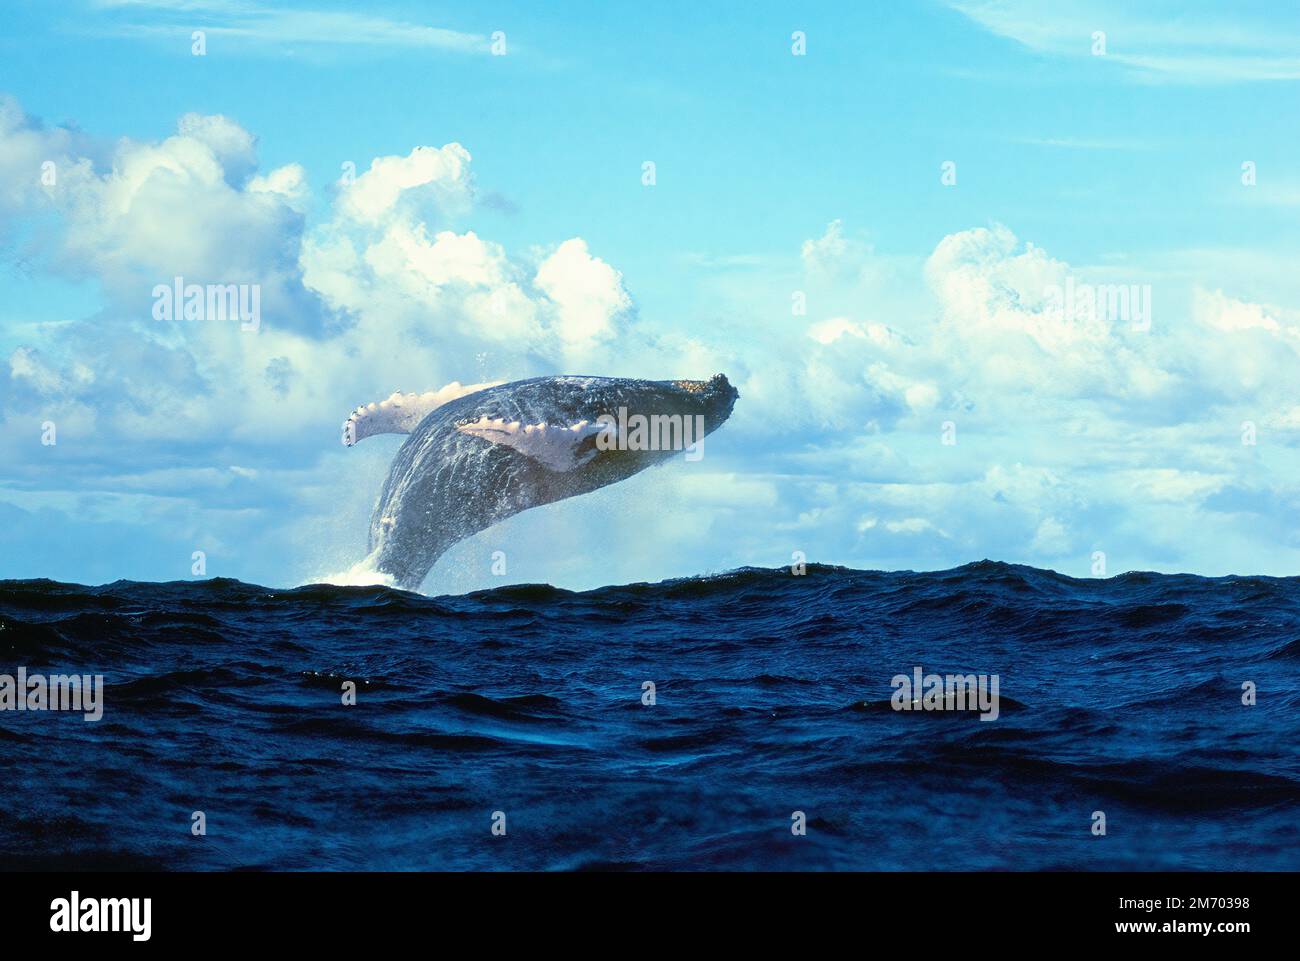 großer Buckelwal (Megaptera novaeangliae) springt aus Wasser lässt sich auf Rücken fallen, Karibik, Pazifik, Atlantik, Südsee Stock Photo